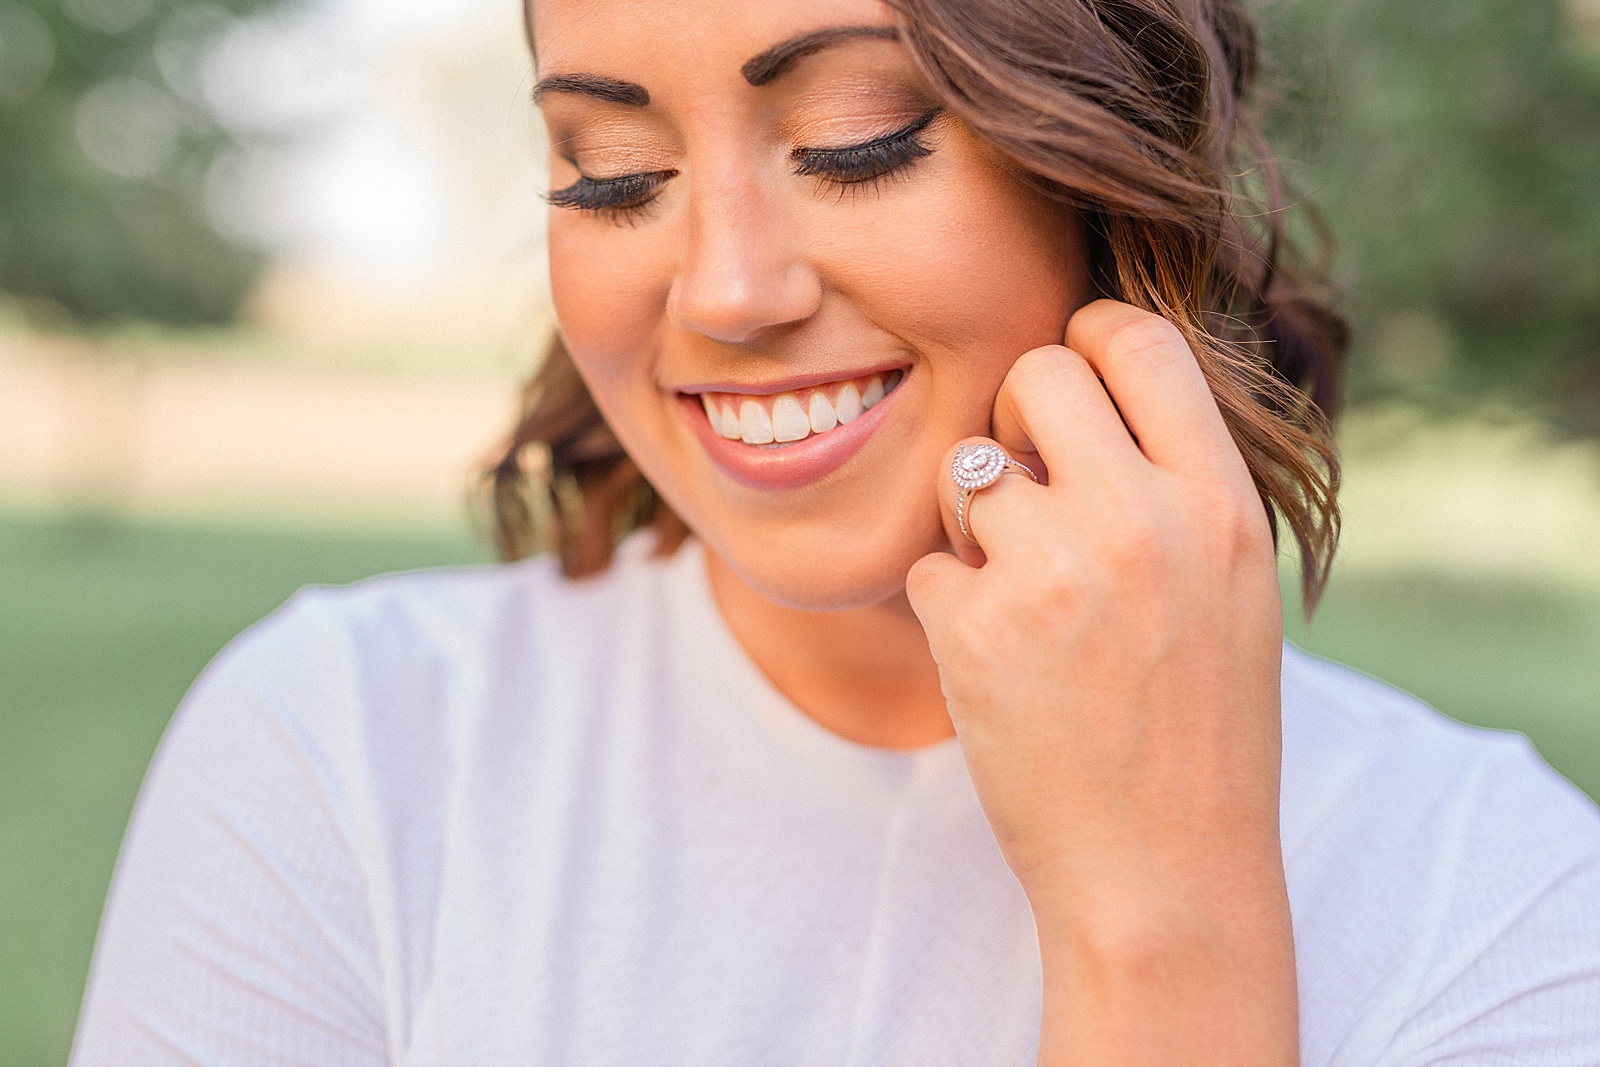 Engagement ring